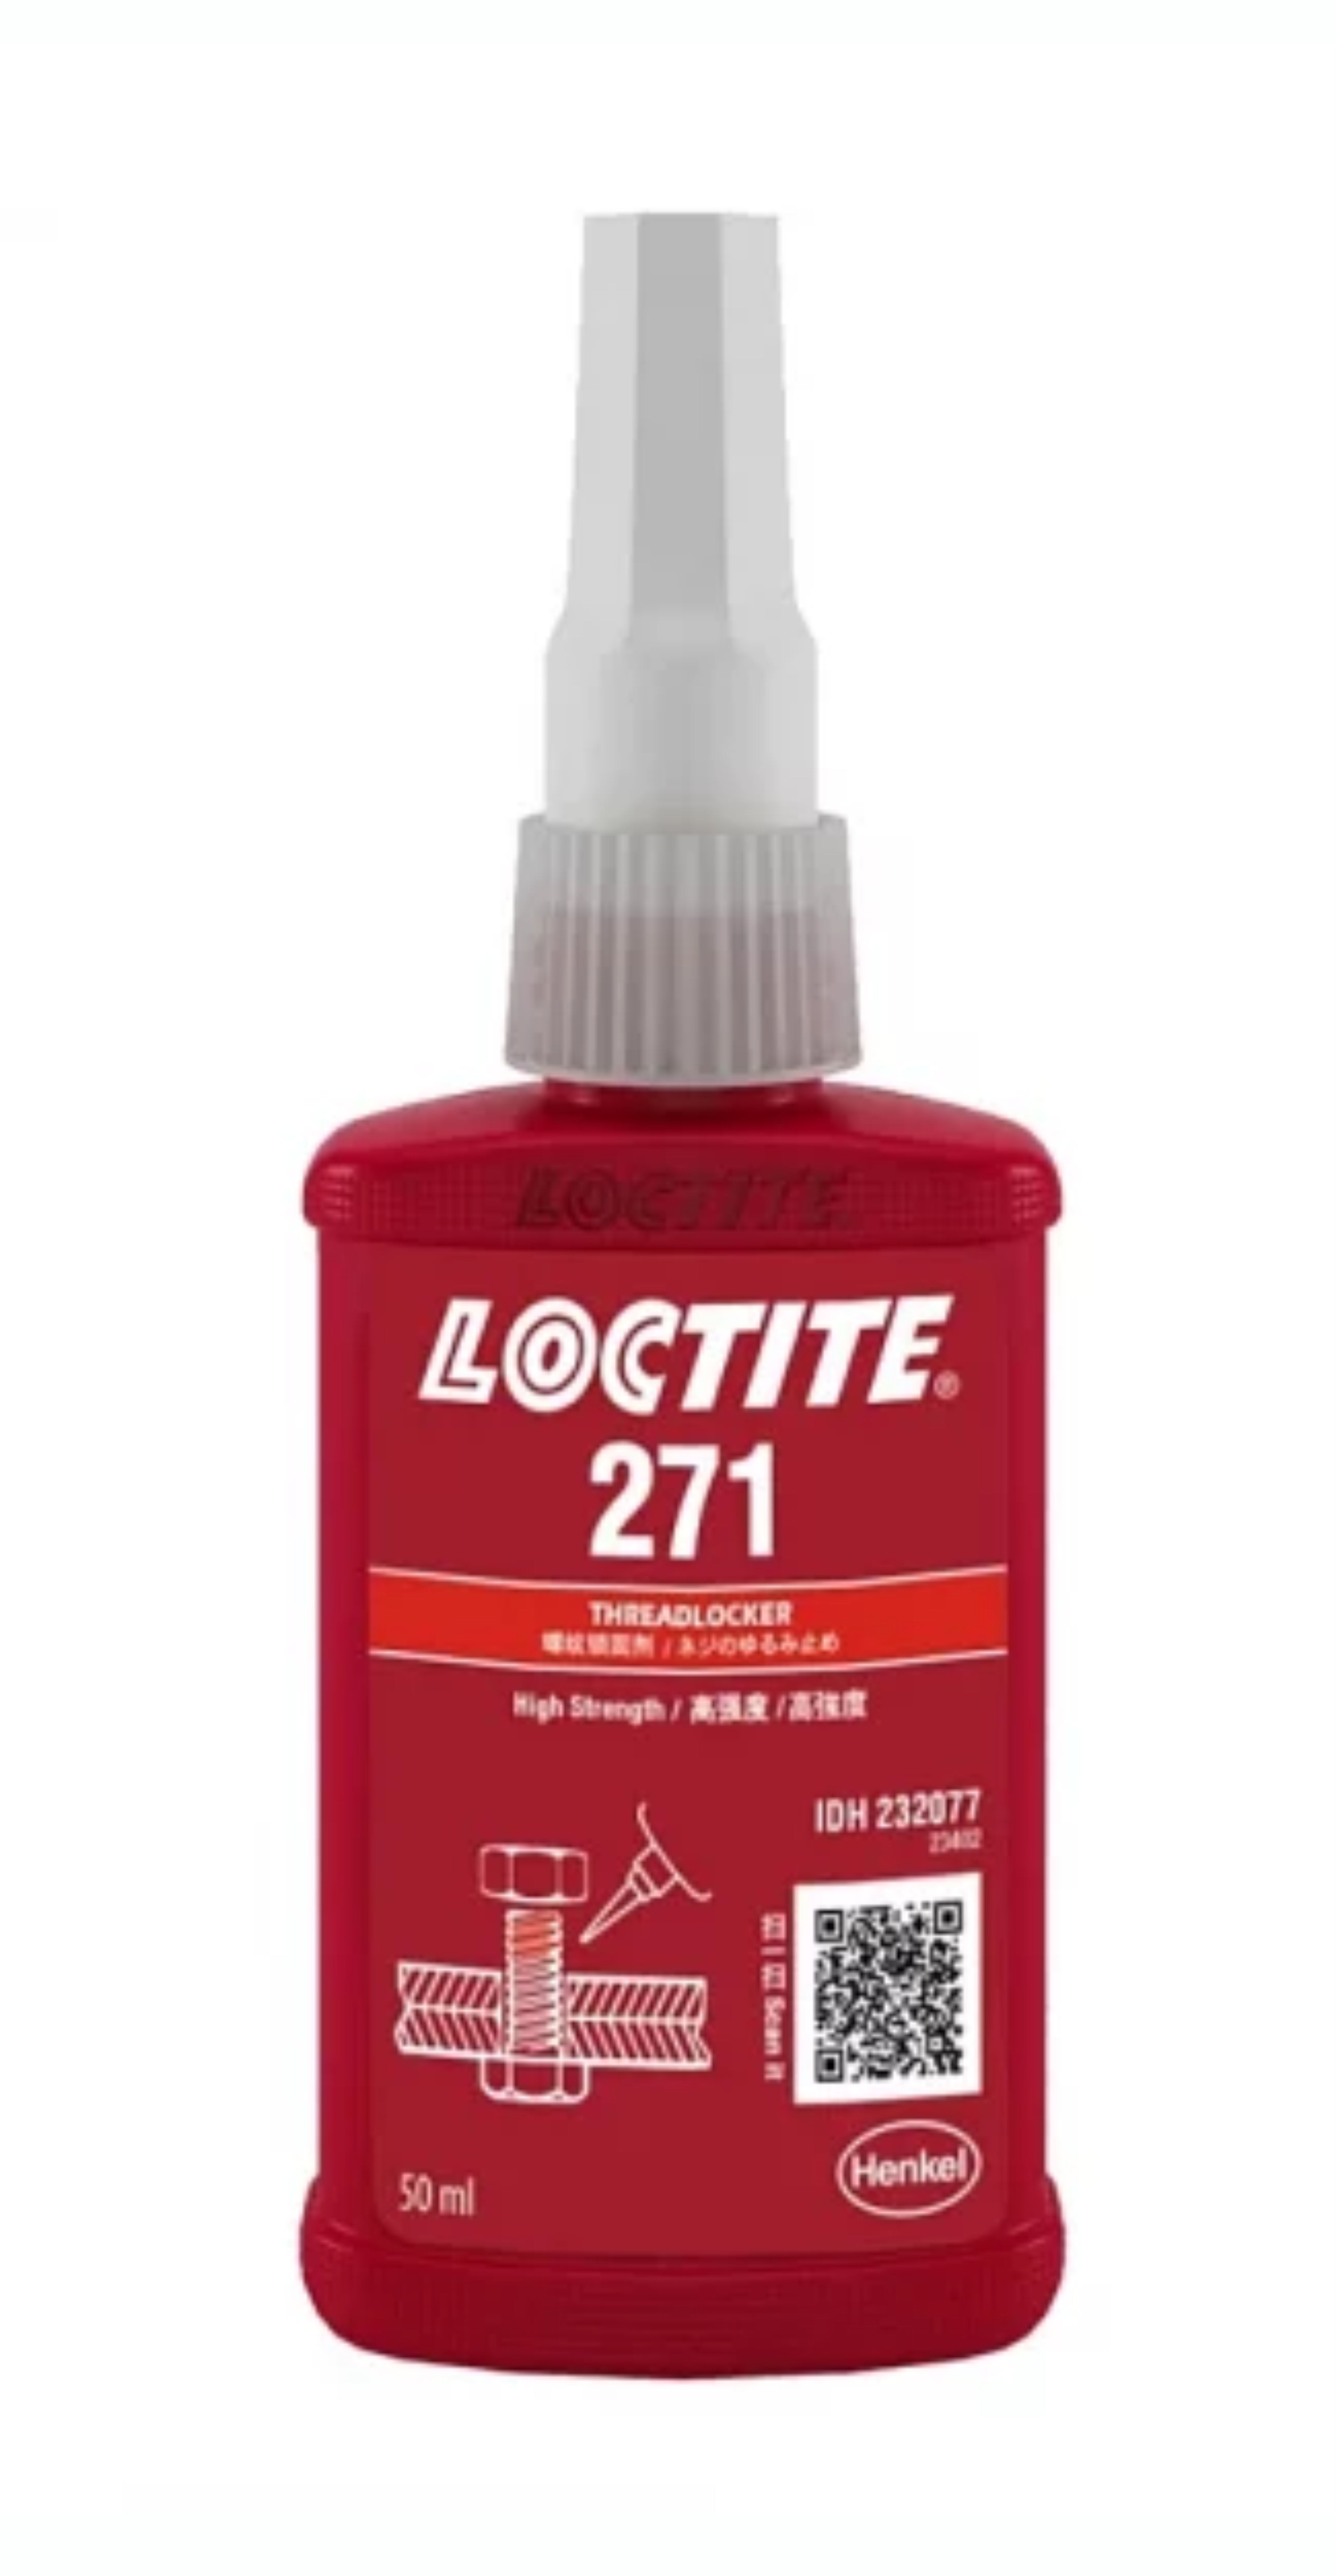 LOCTITE 271 Thread locker High Strength